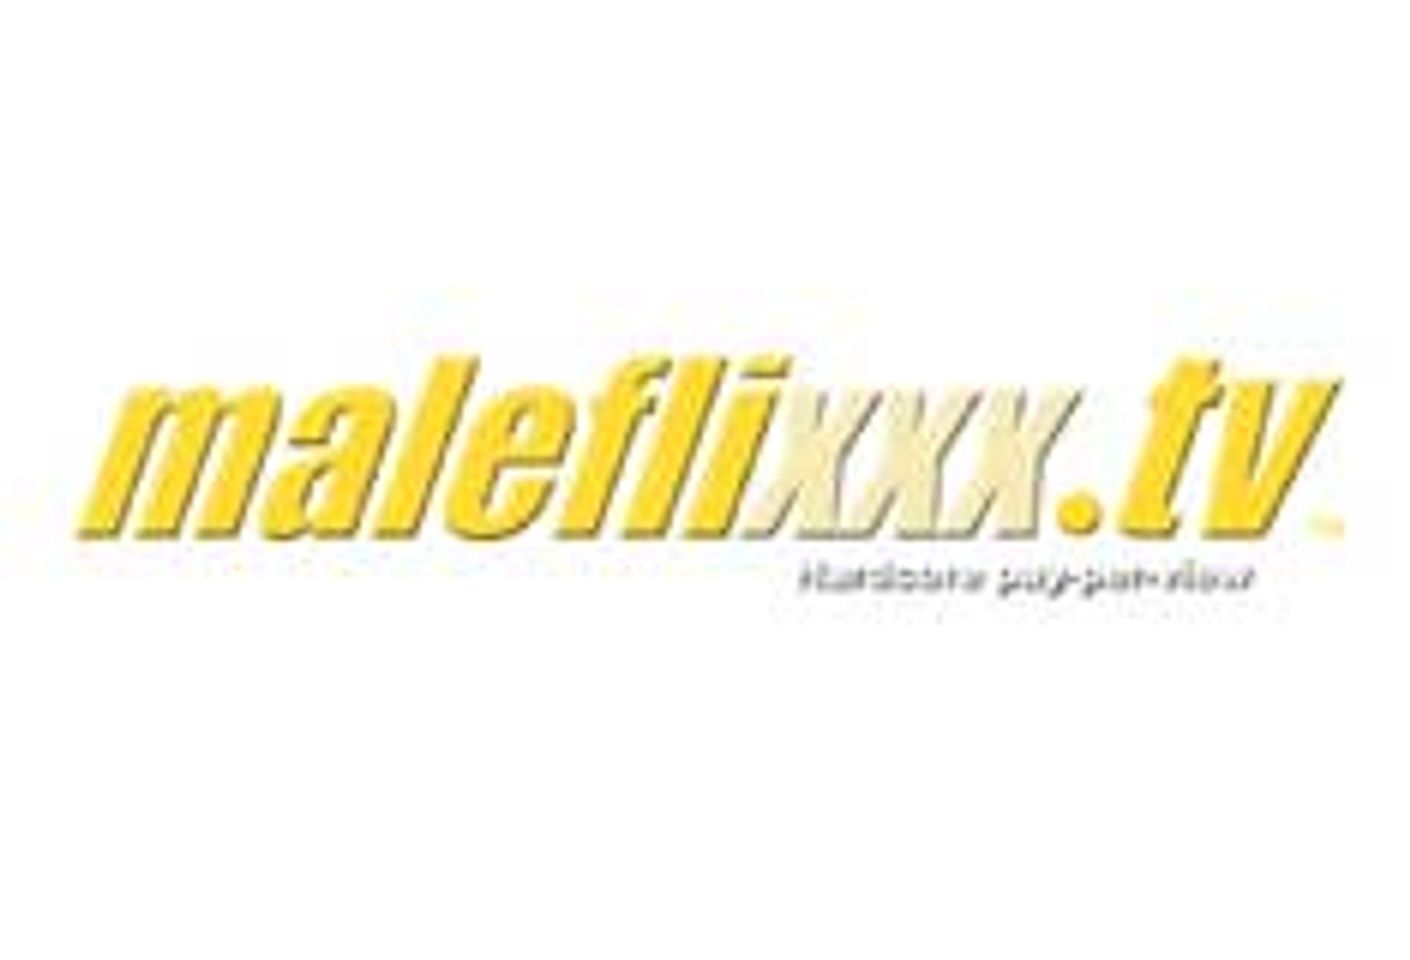 Maleflixxx Lands Exclusive Rights to WrestleHard.com Content